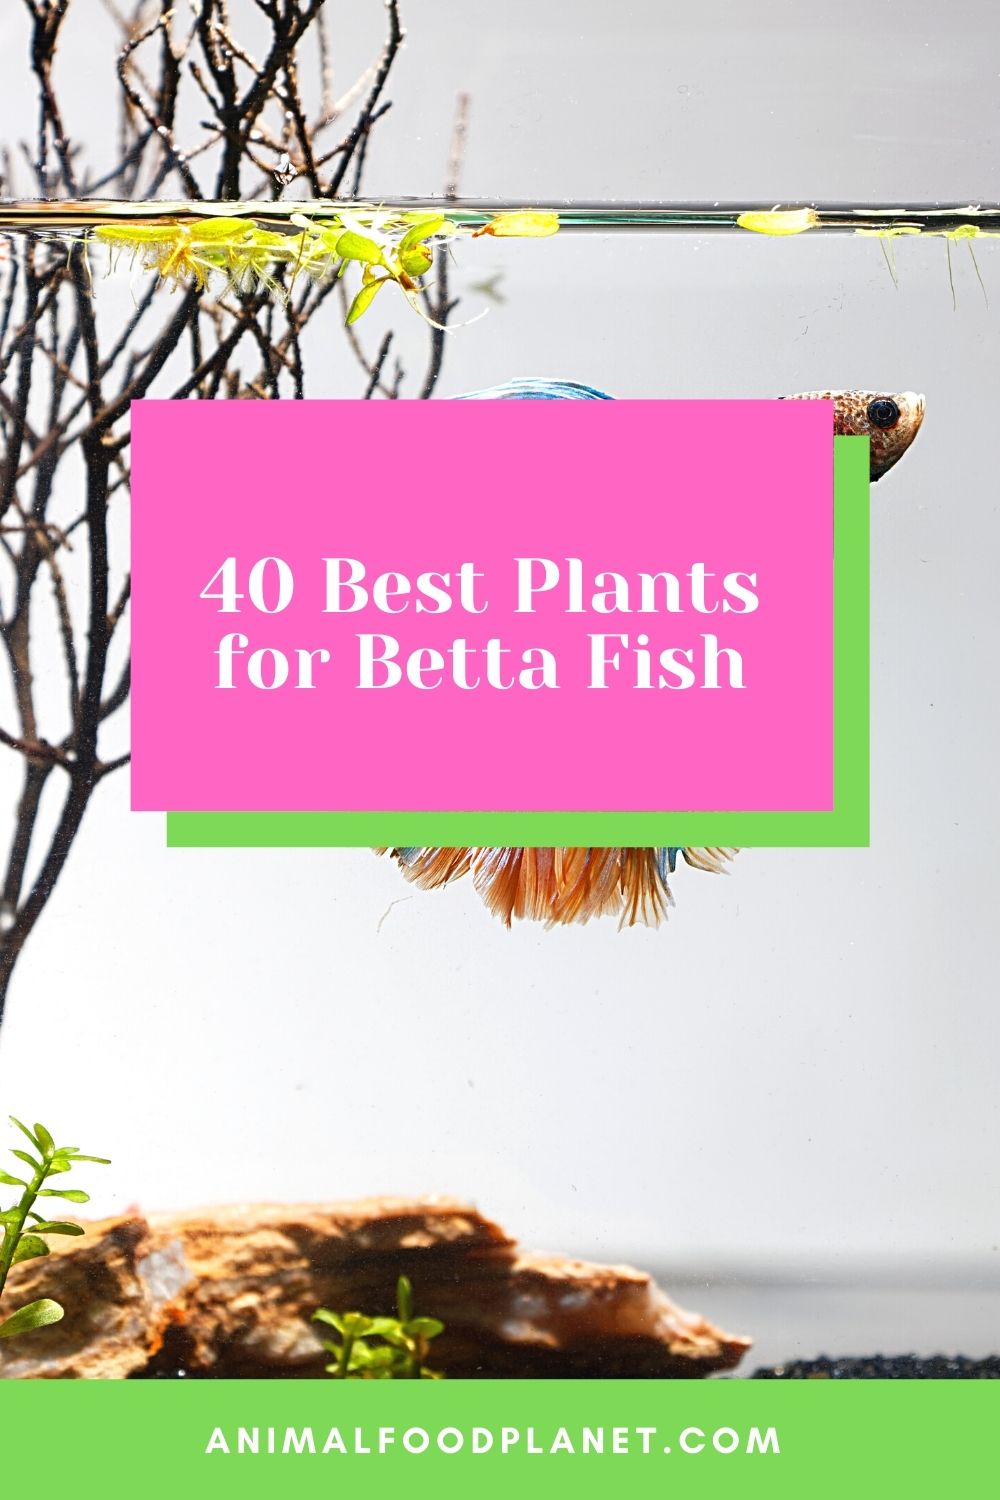 40 Best Plants for Betta Fish